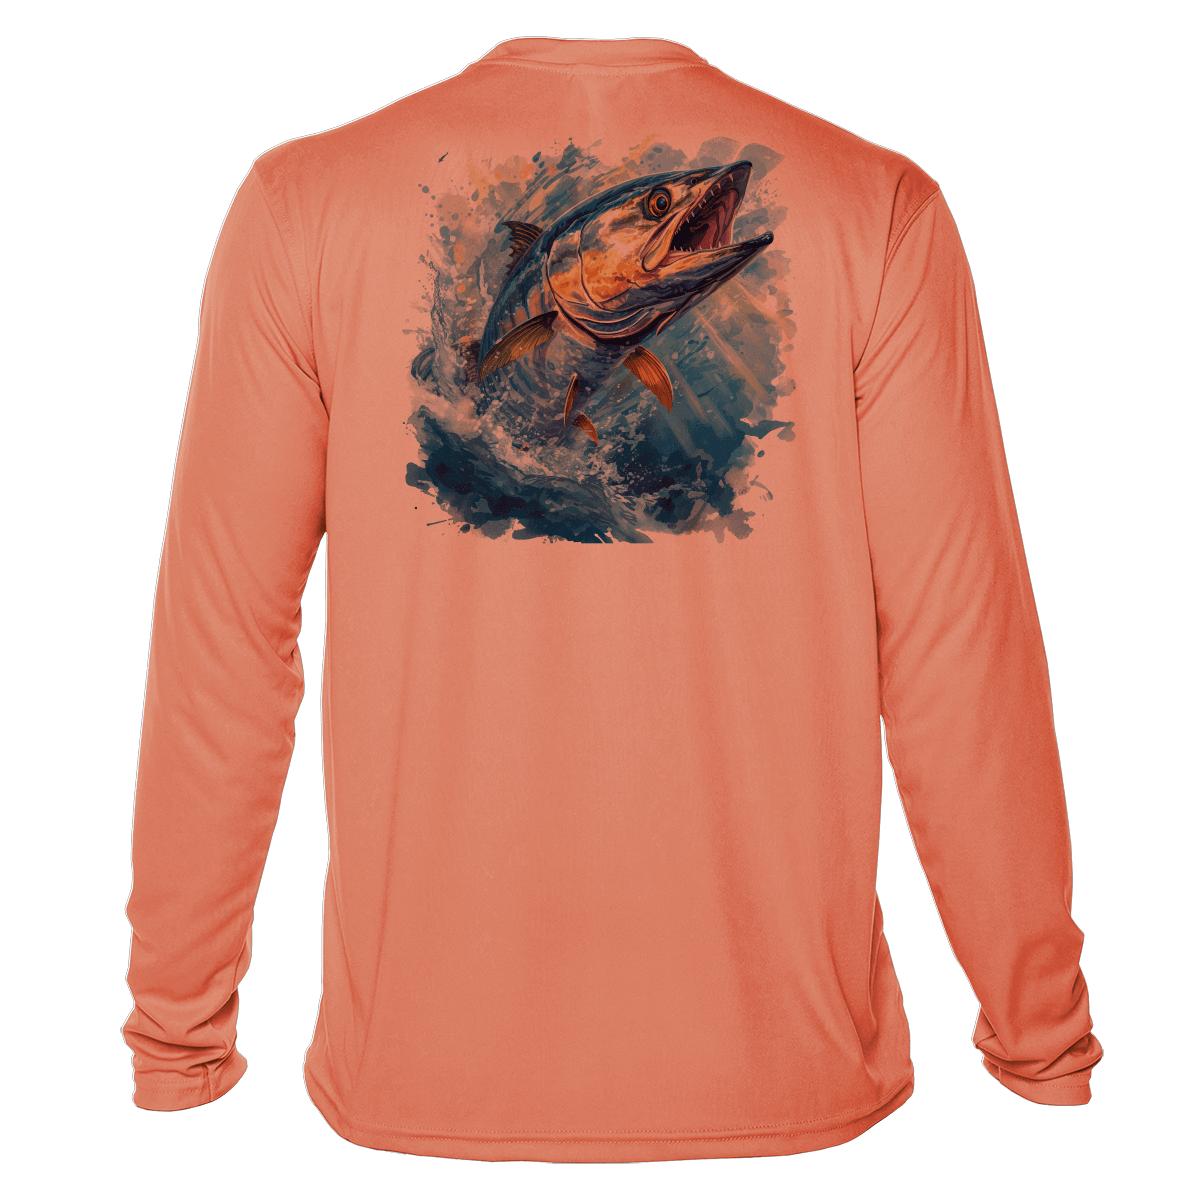 Fishing Shirt Outfitters - Angler's Collection: King Mackerel - UPF 50+ Long Sleeve - Salmon,LG